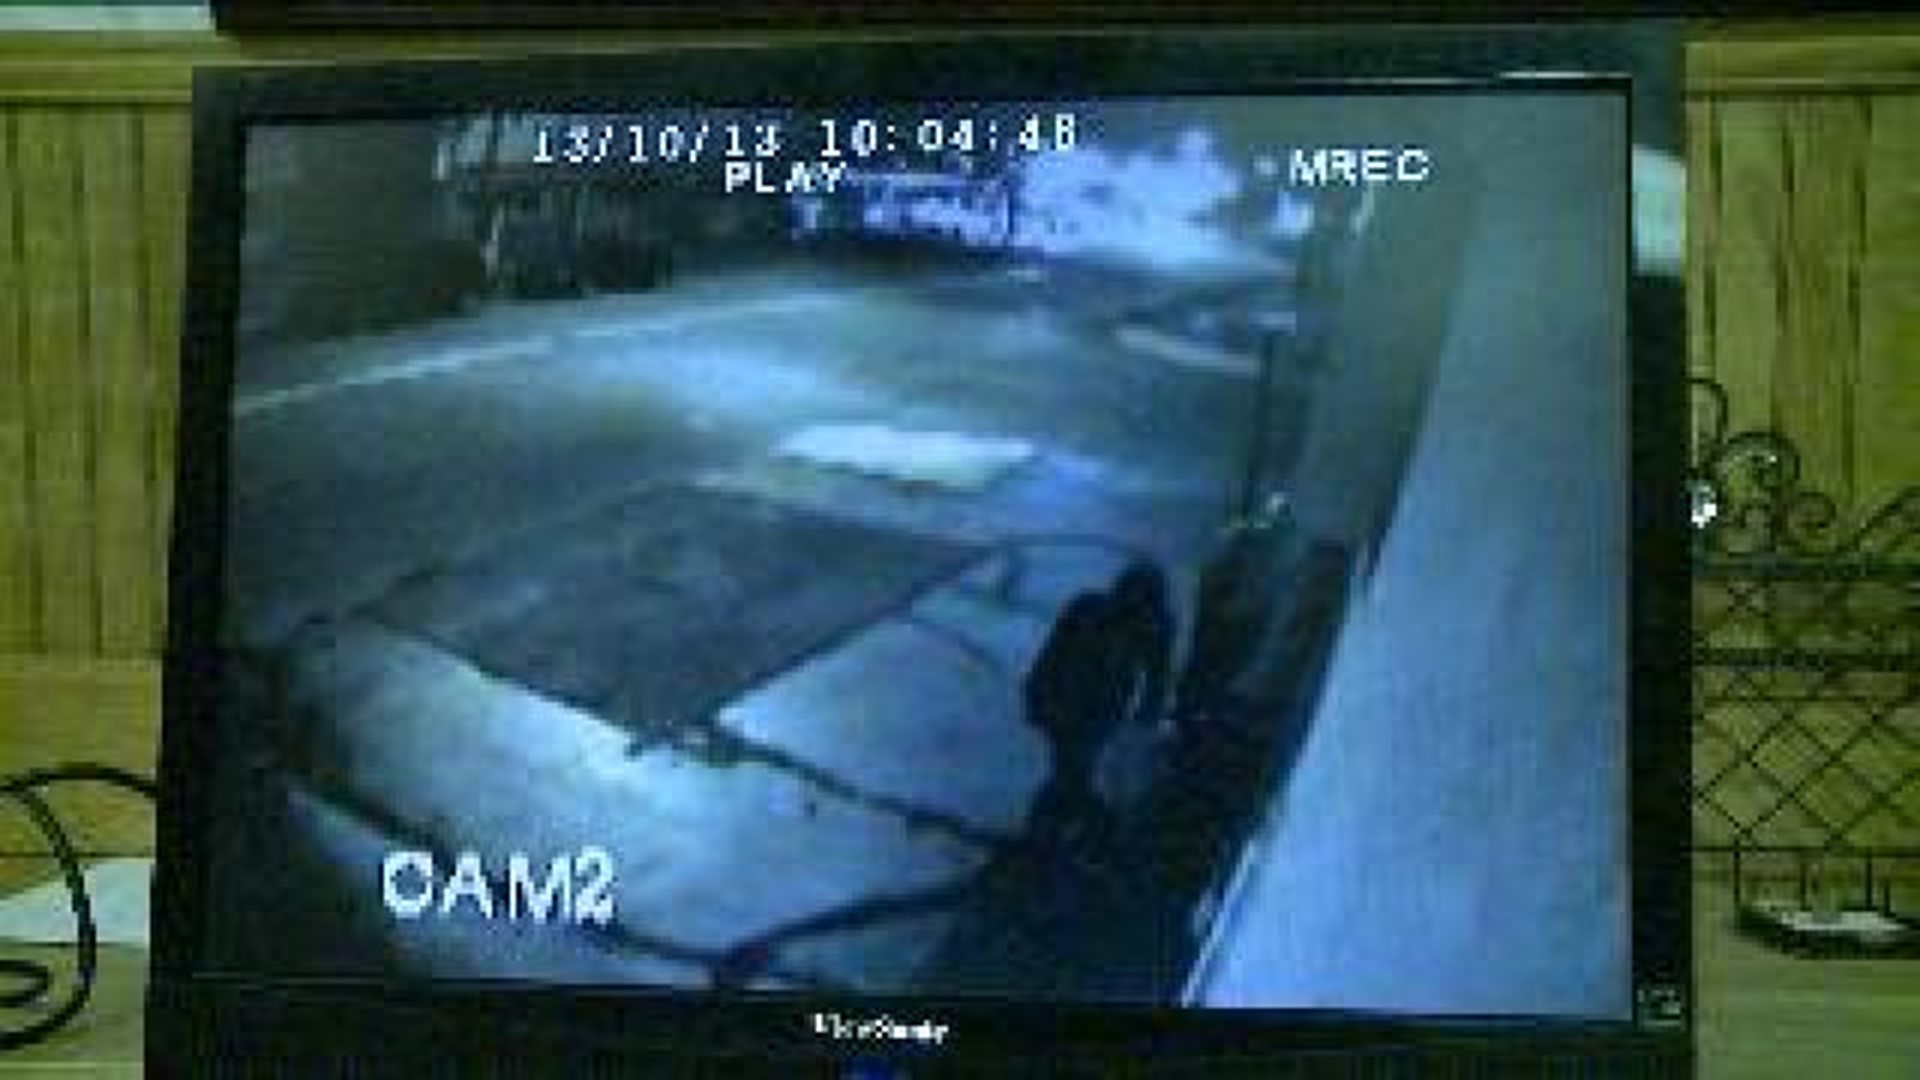 Police Investigate Burglary at Store in Scranton